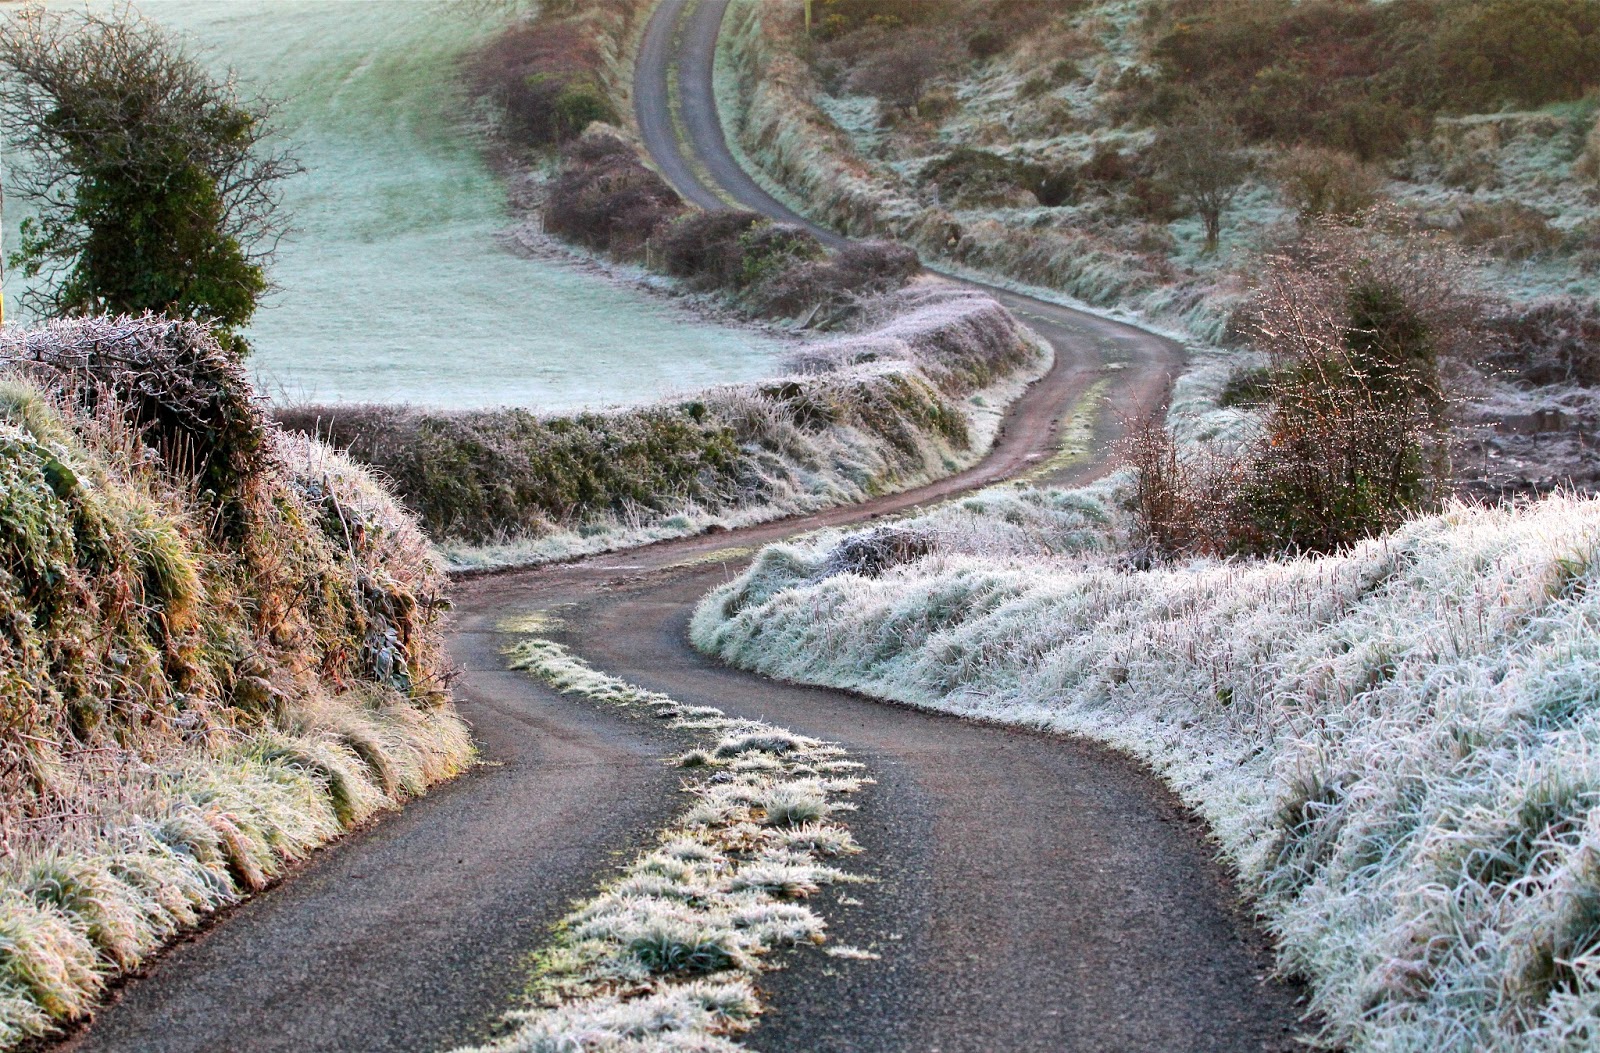 Frosty morning on the lane